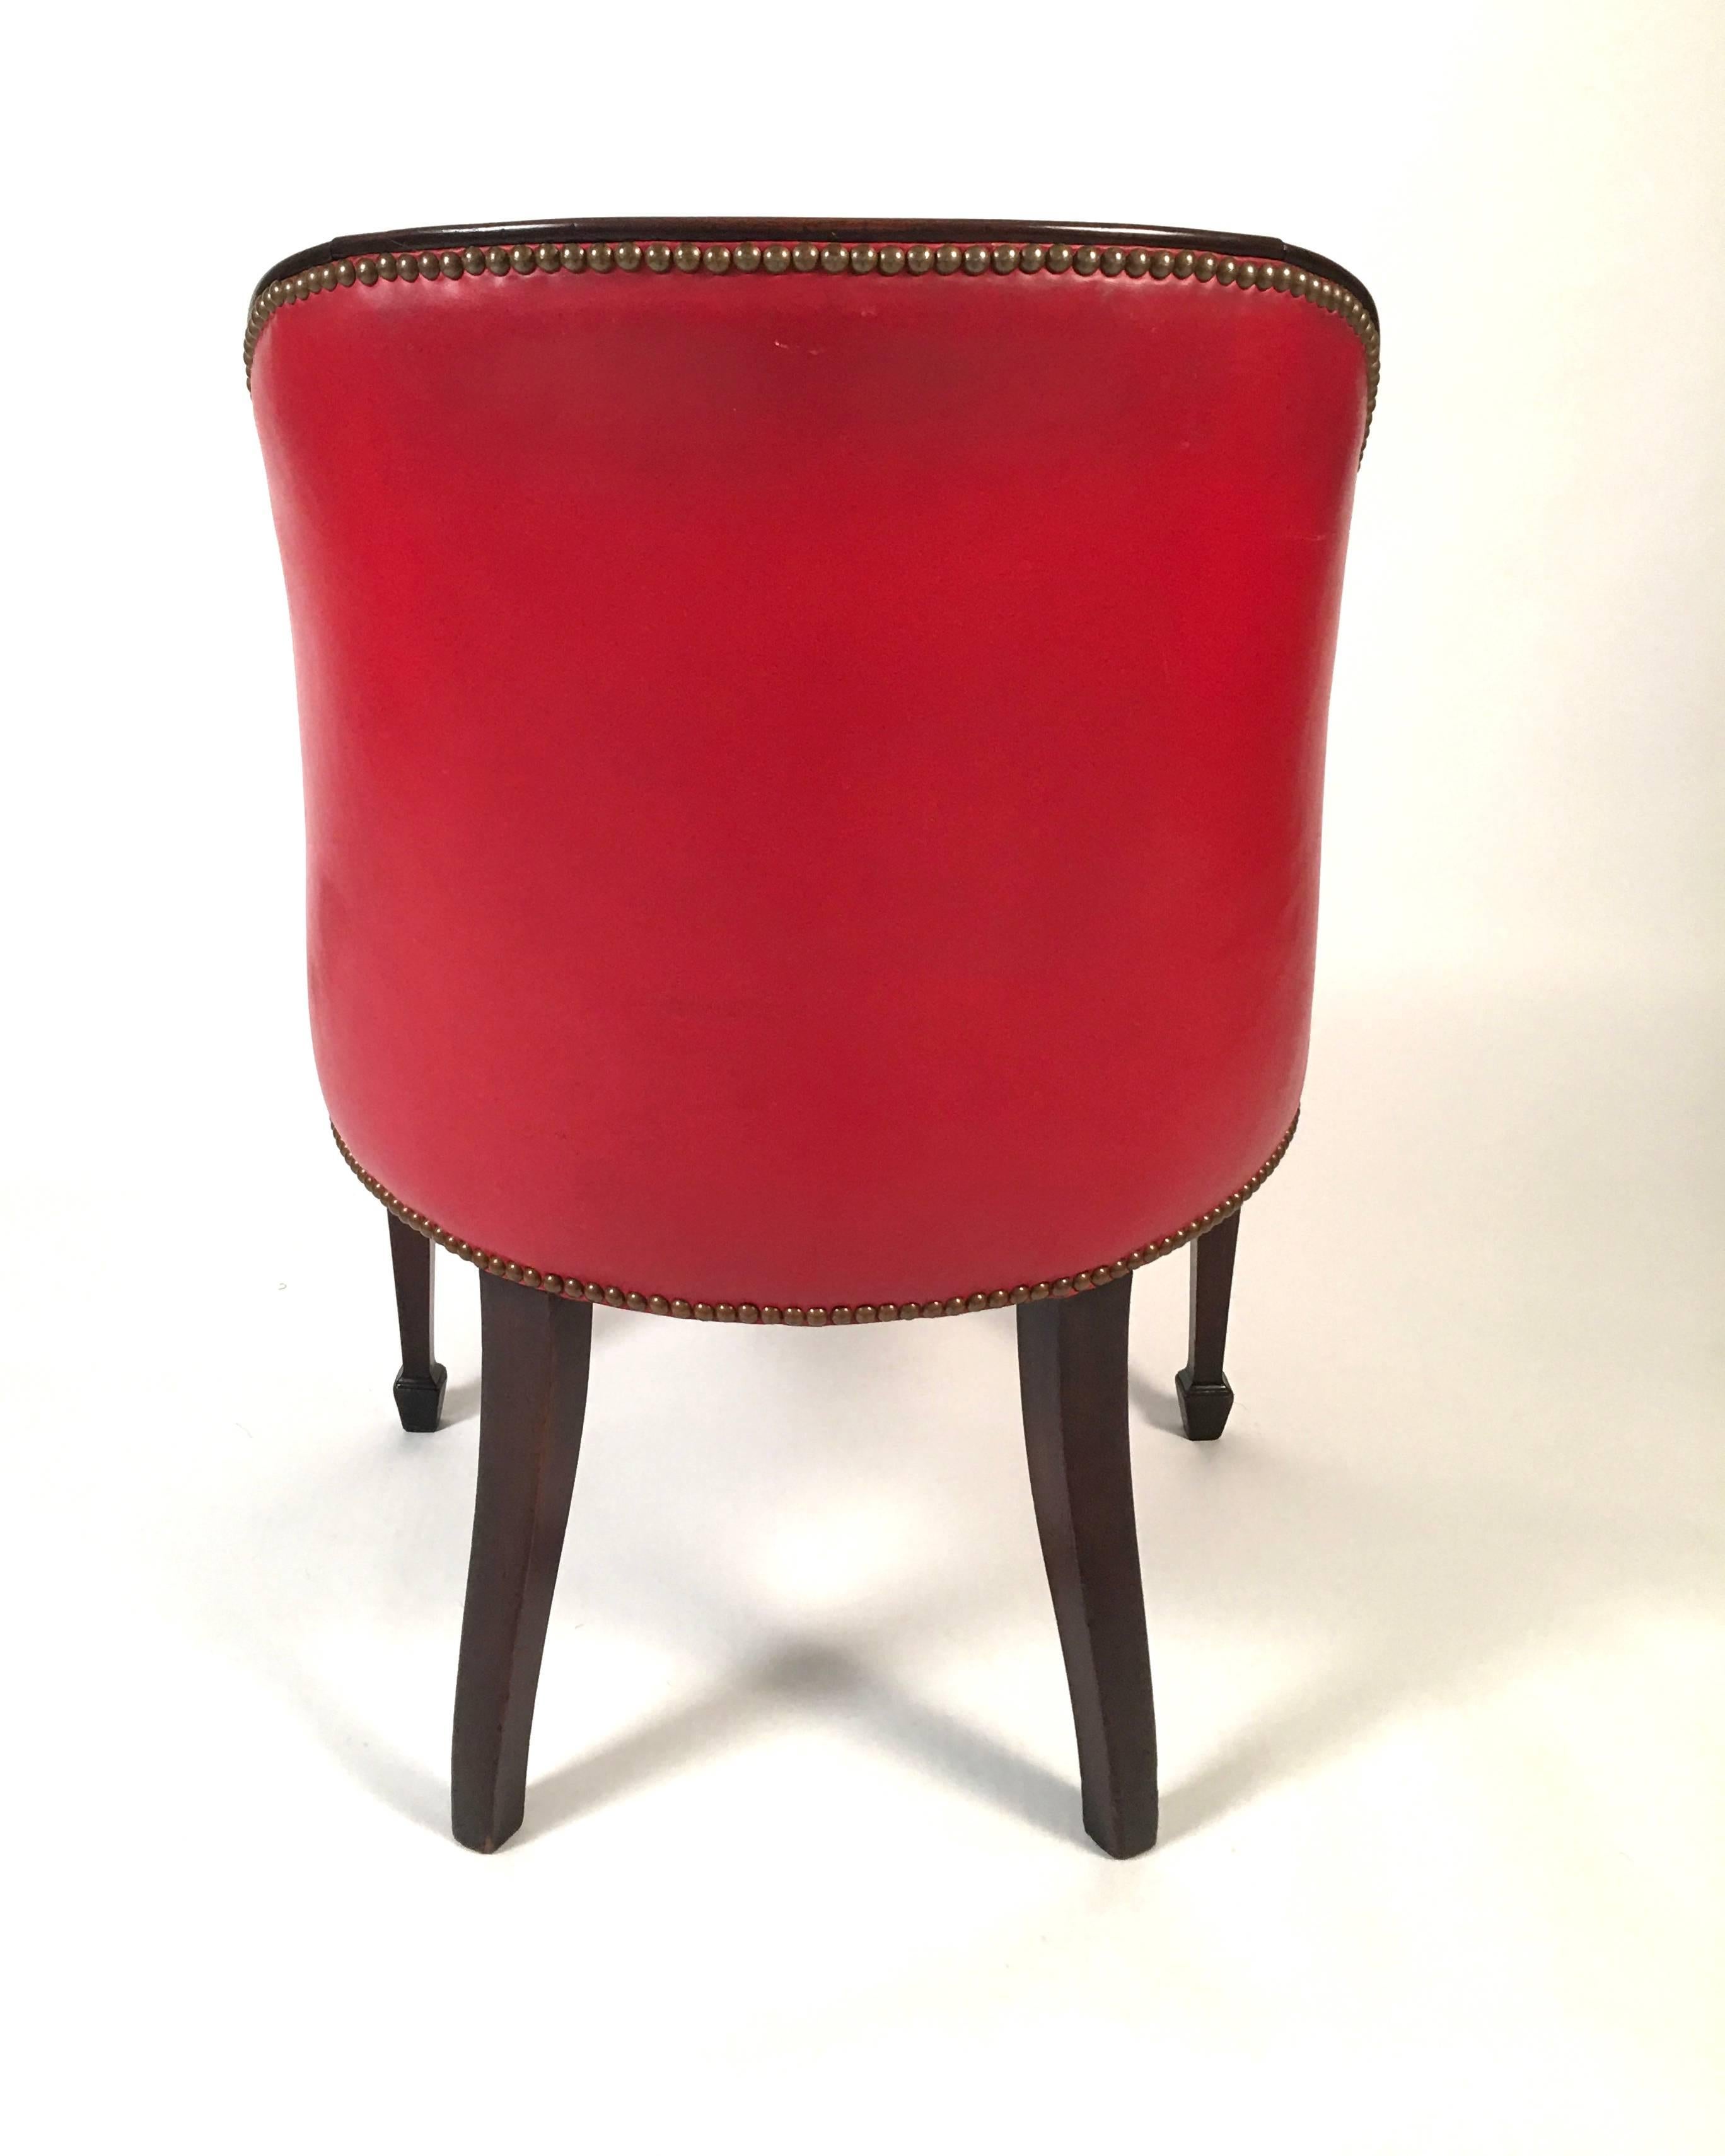 Carved Hepplewhite Red Leather Barrel Back Armchair